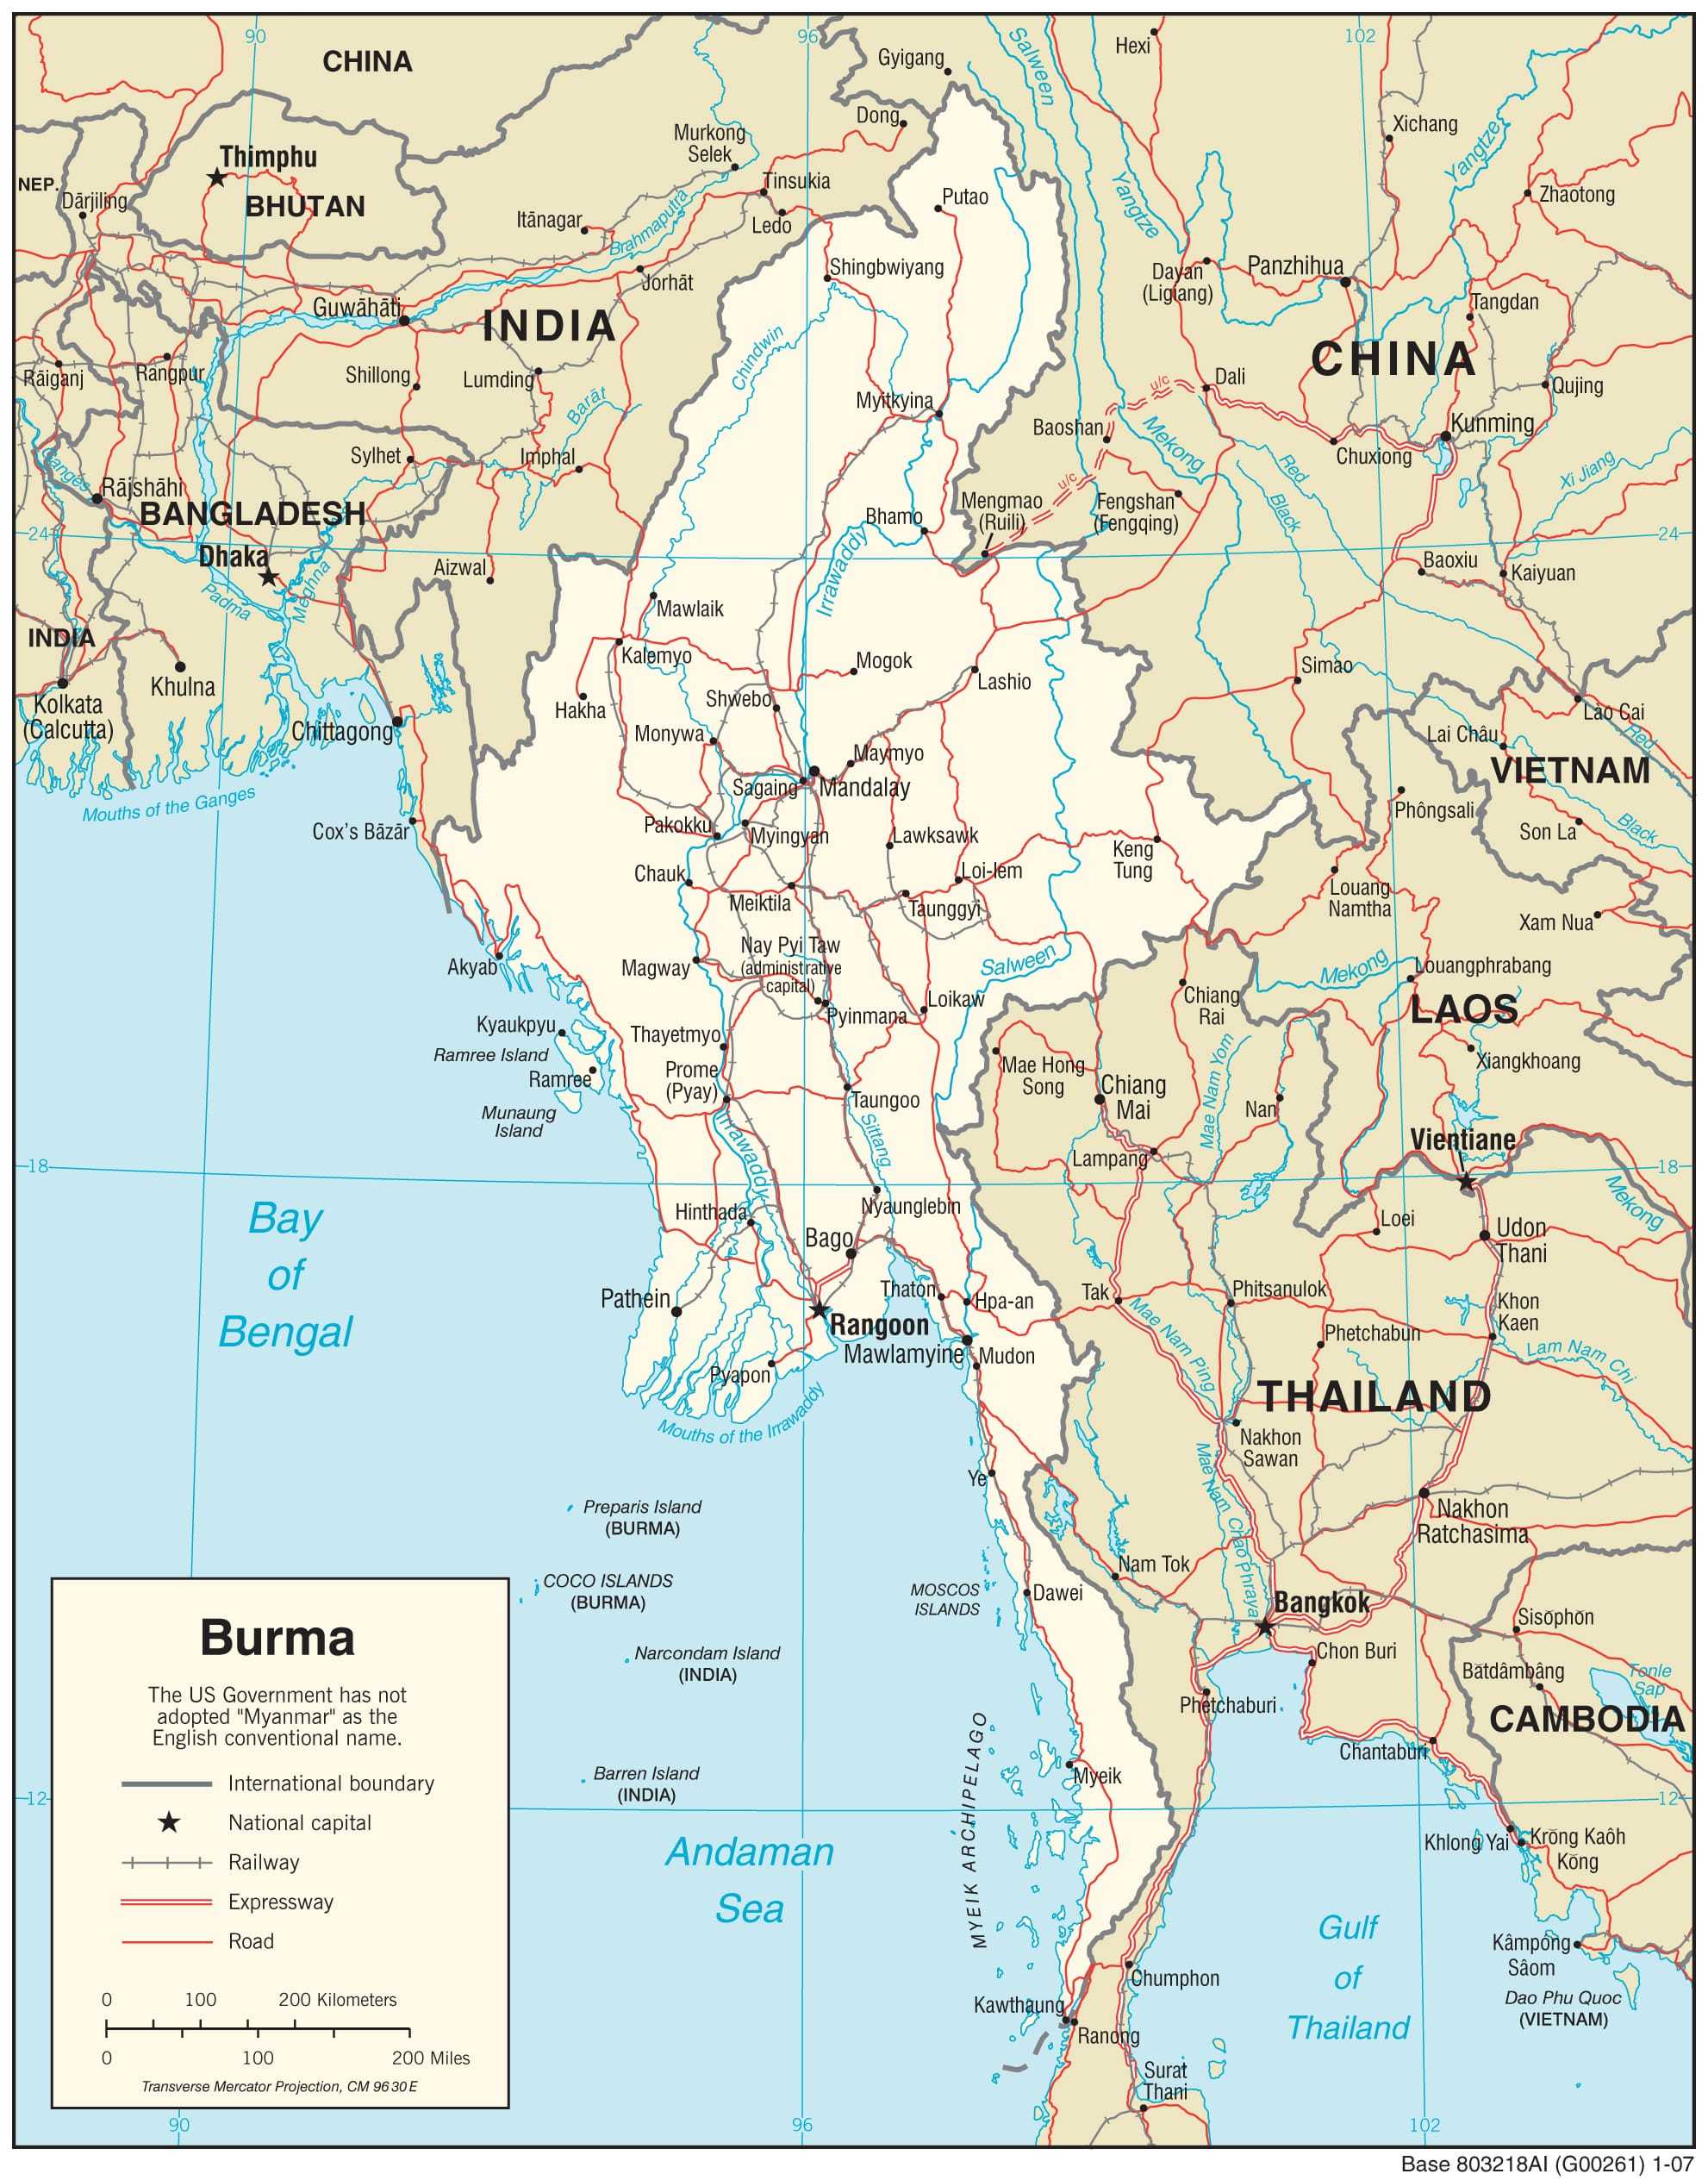 Transportation map of Burma.